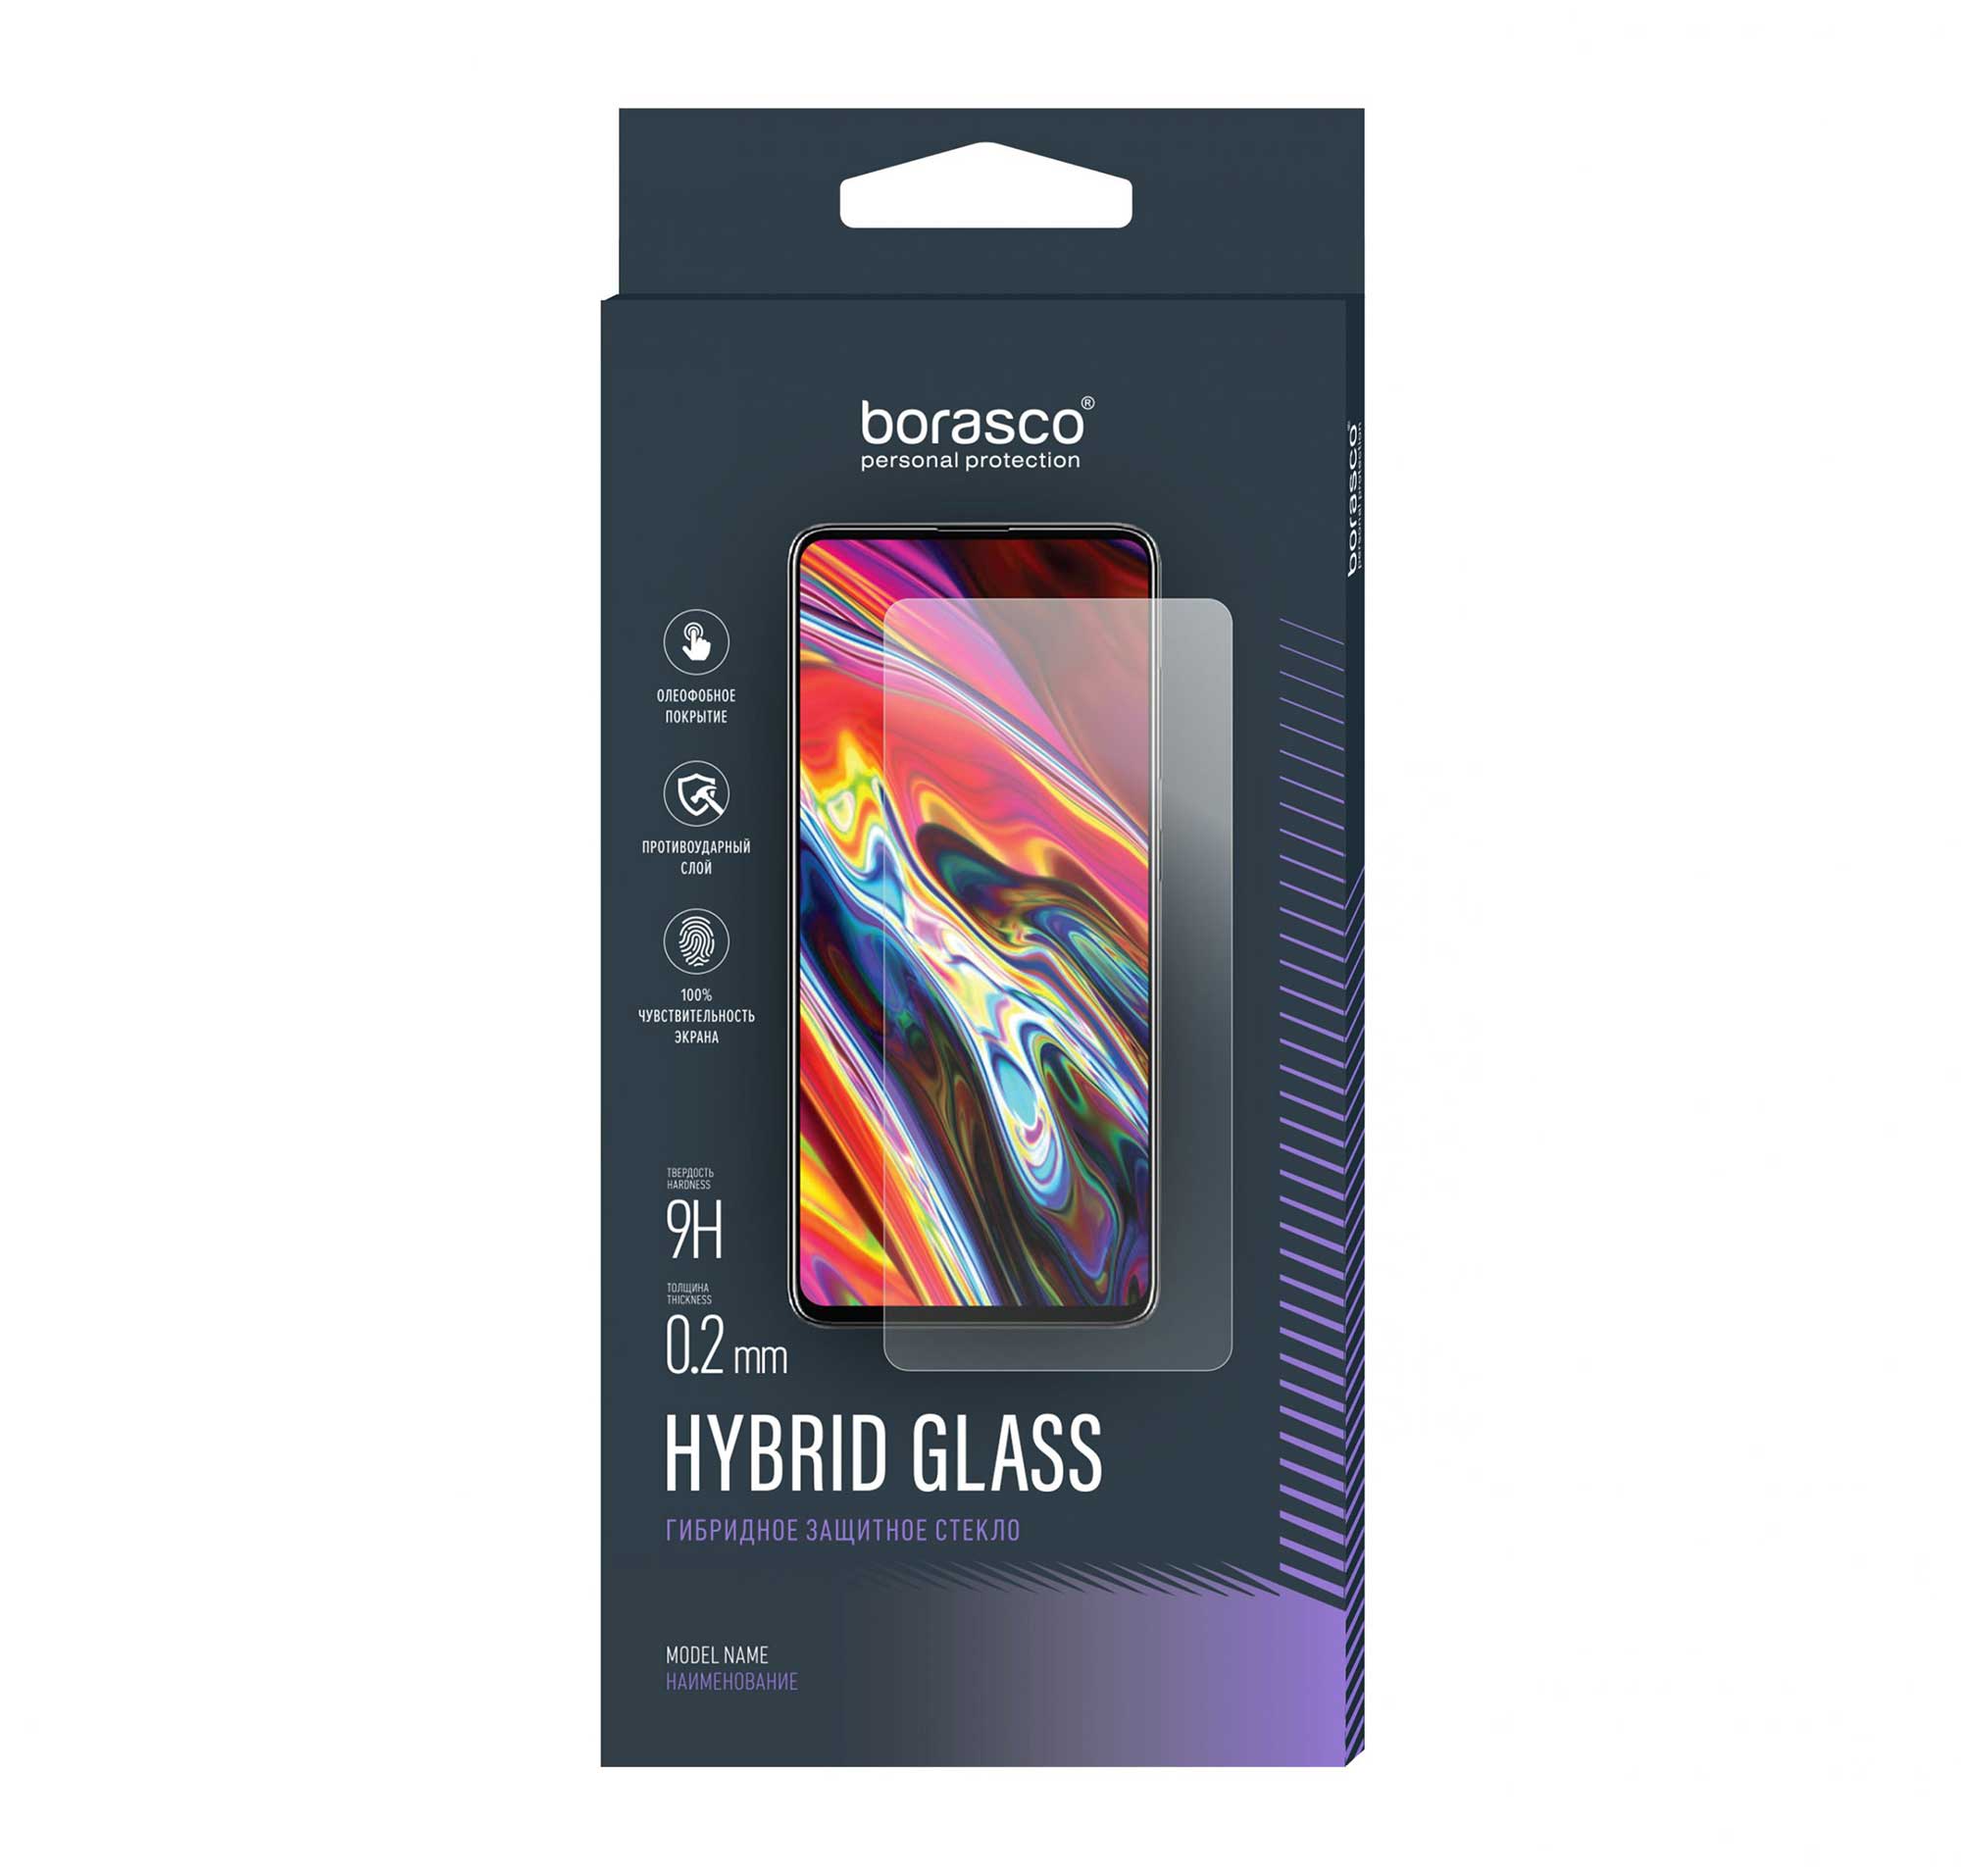 Защитное стекло Hybrid Glass для OPPO A53 цена и фото